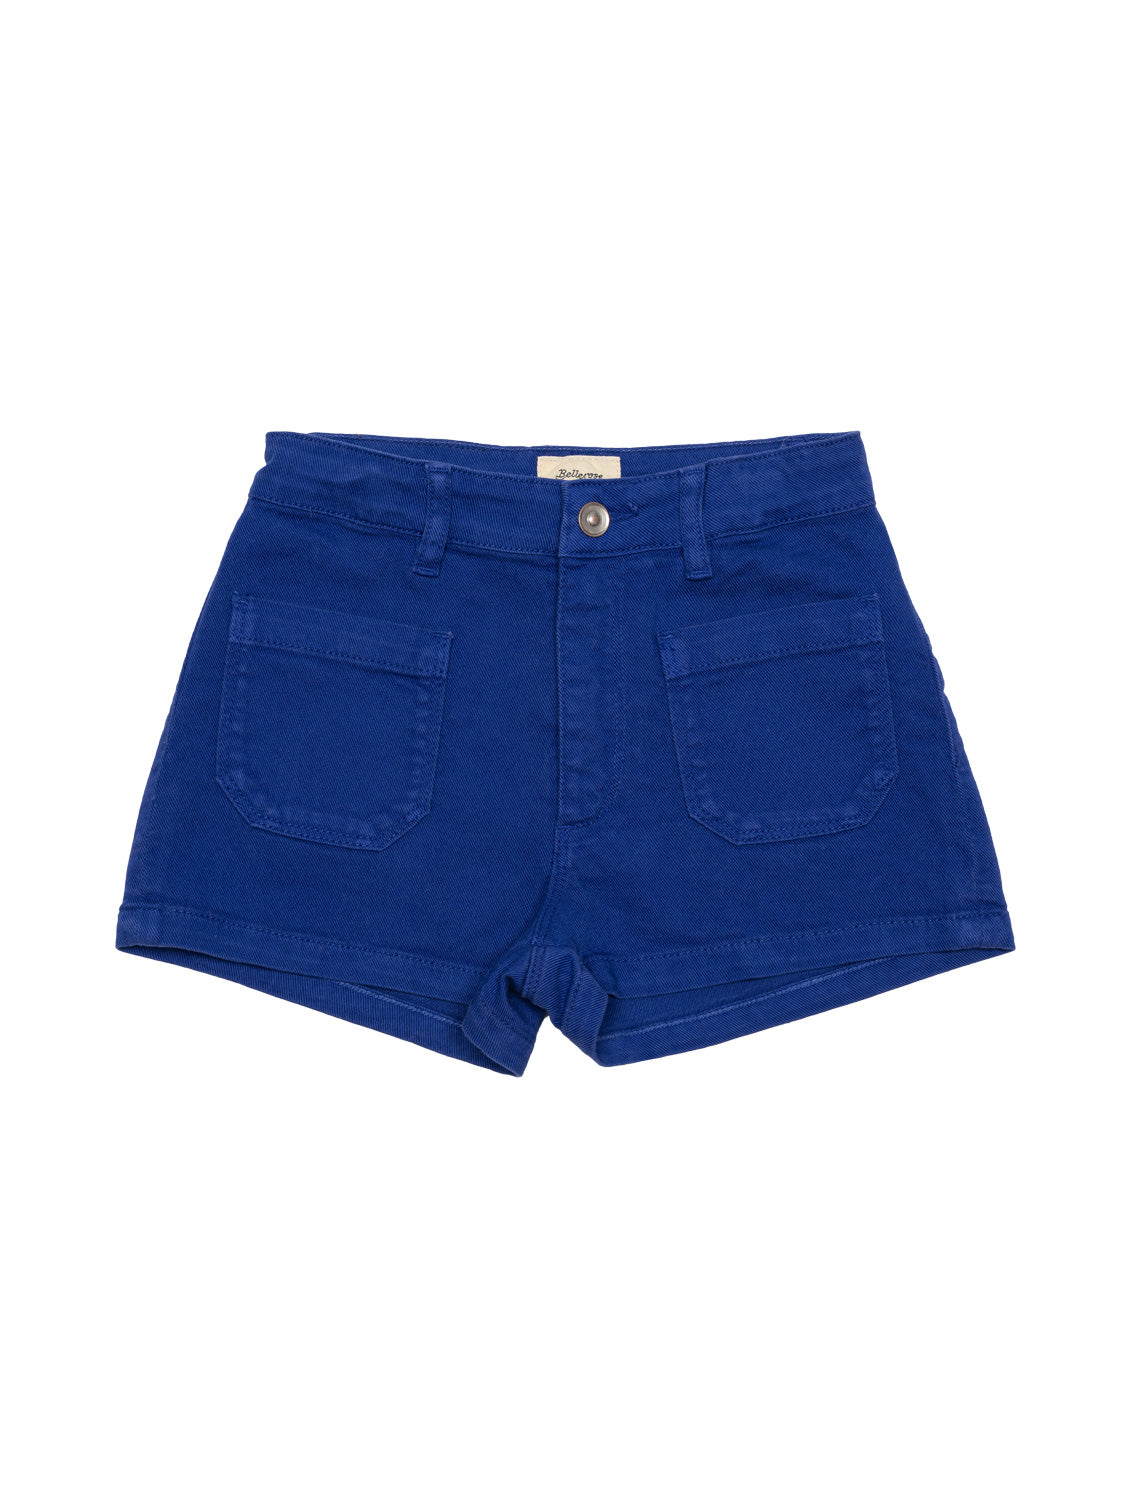 Preppy-Shorts - Marineblau